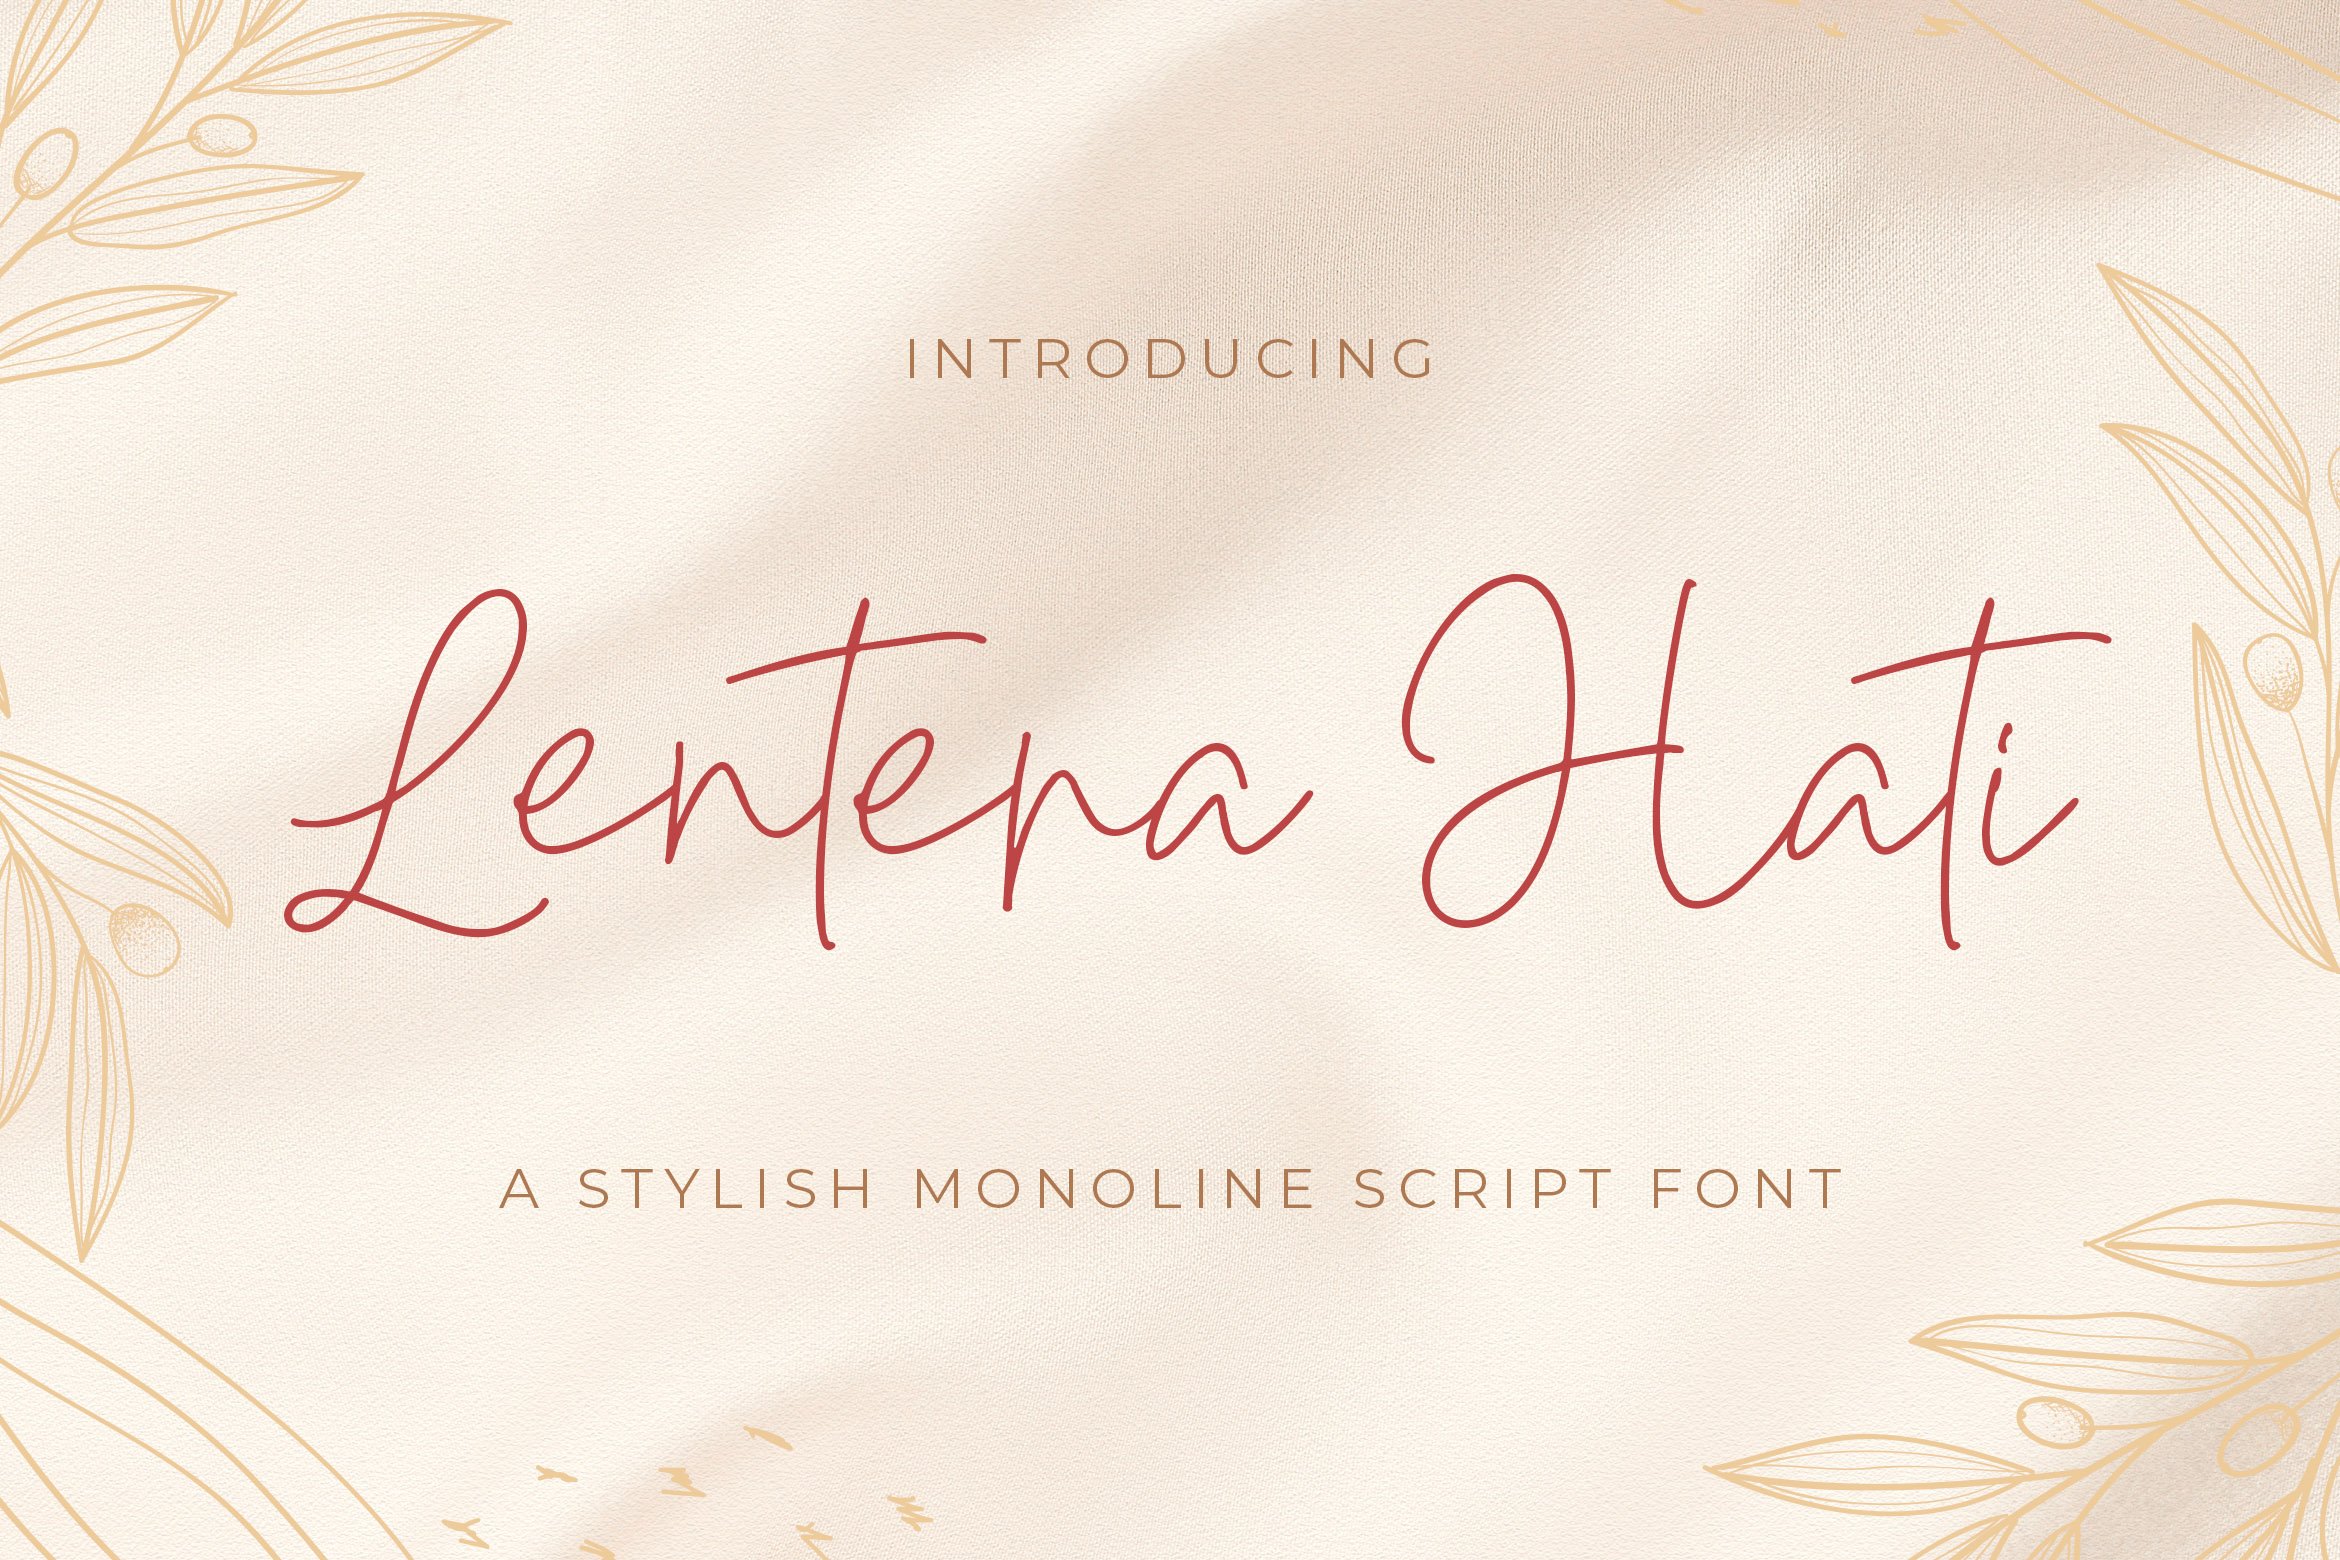 Lentera Hati - Handwritten Font cover image.